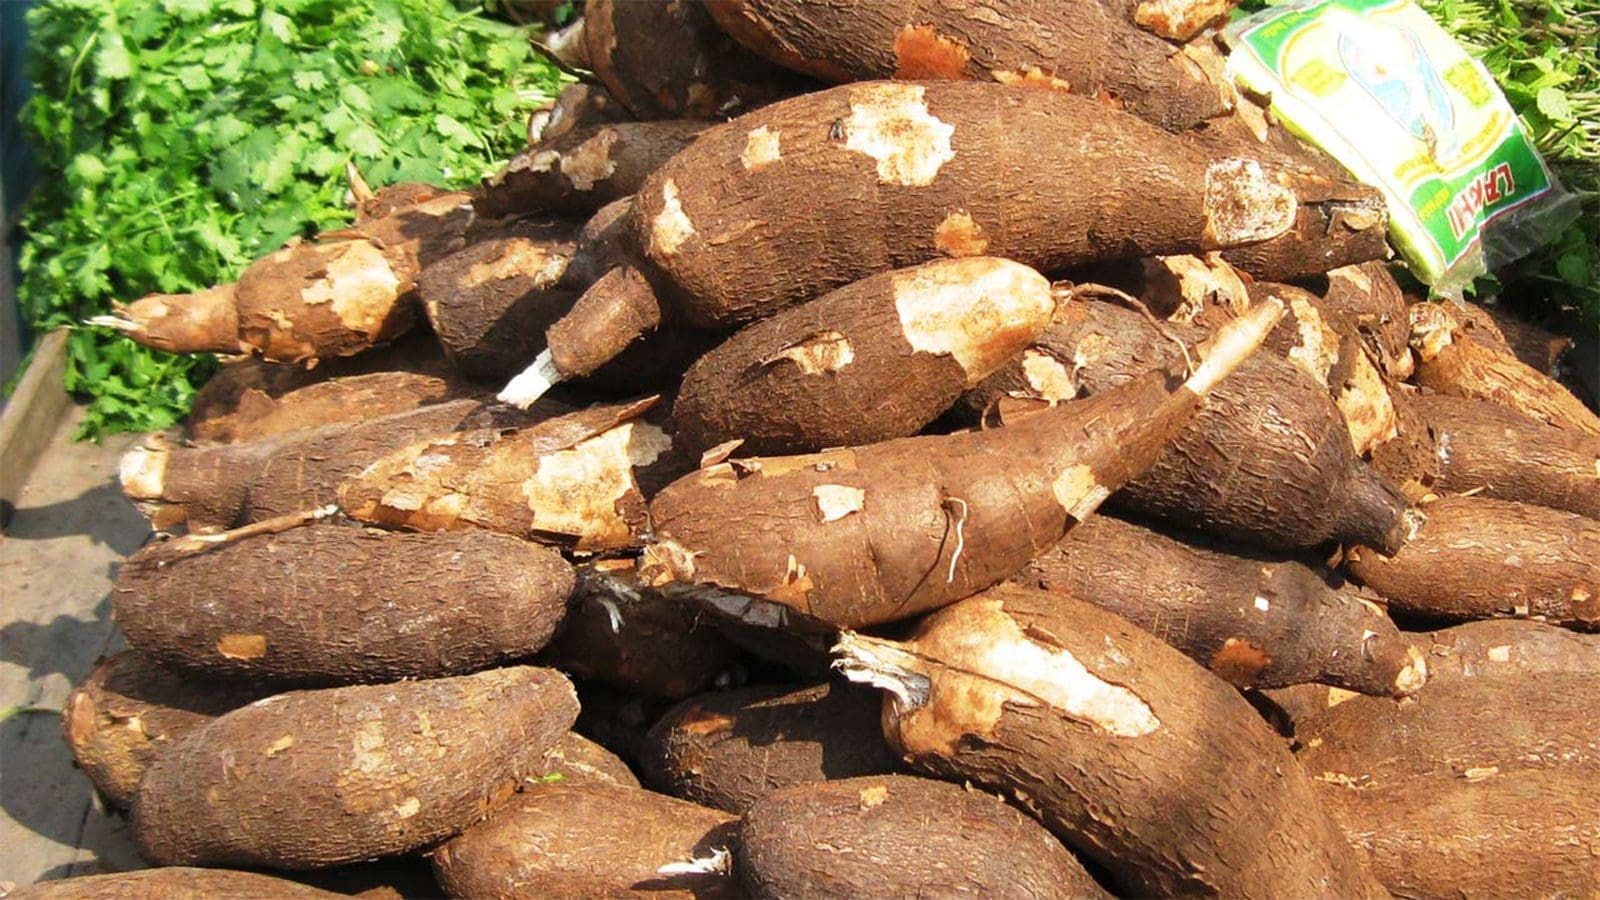 International Institute of Tropical Agriculture develops new disease resistant cassava varieties